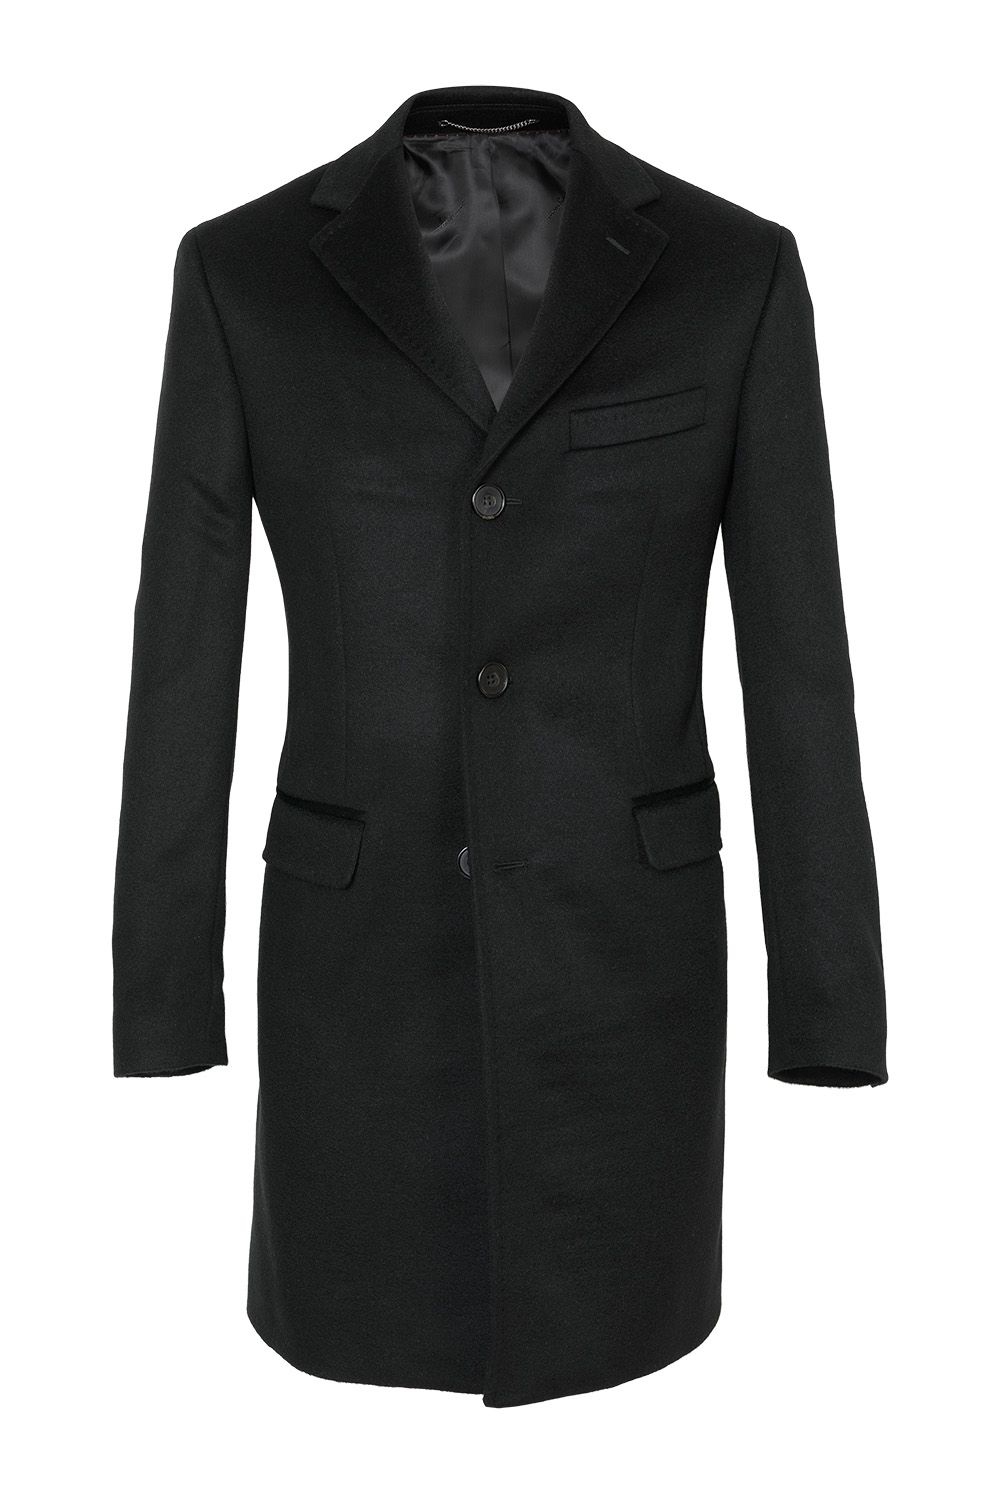 Palton clasic capone negru uni 1